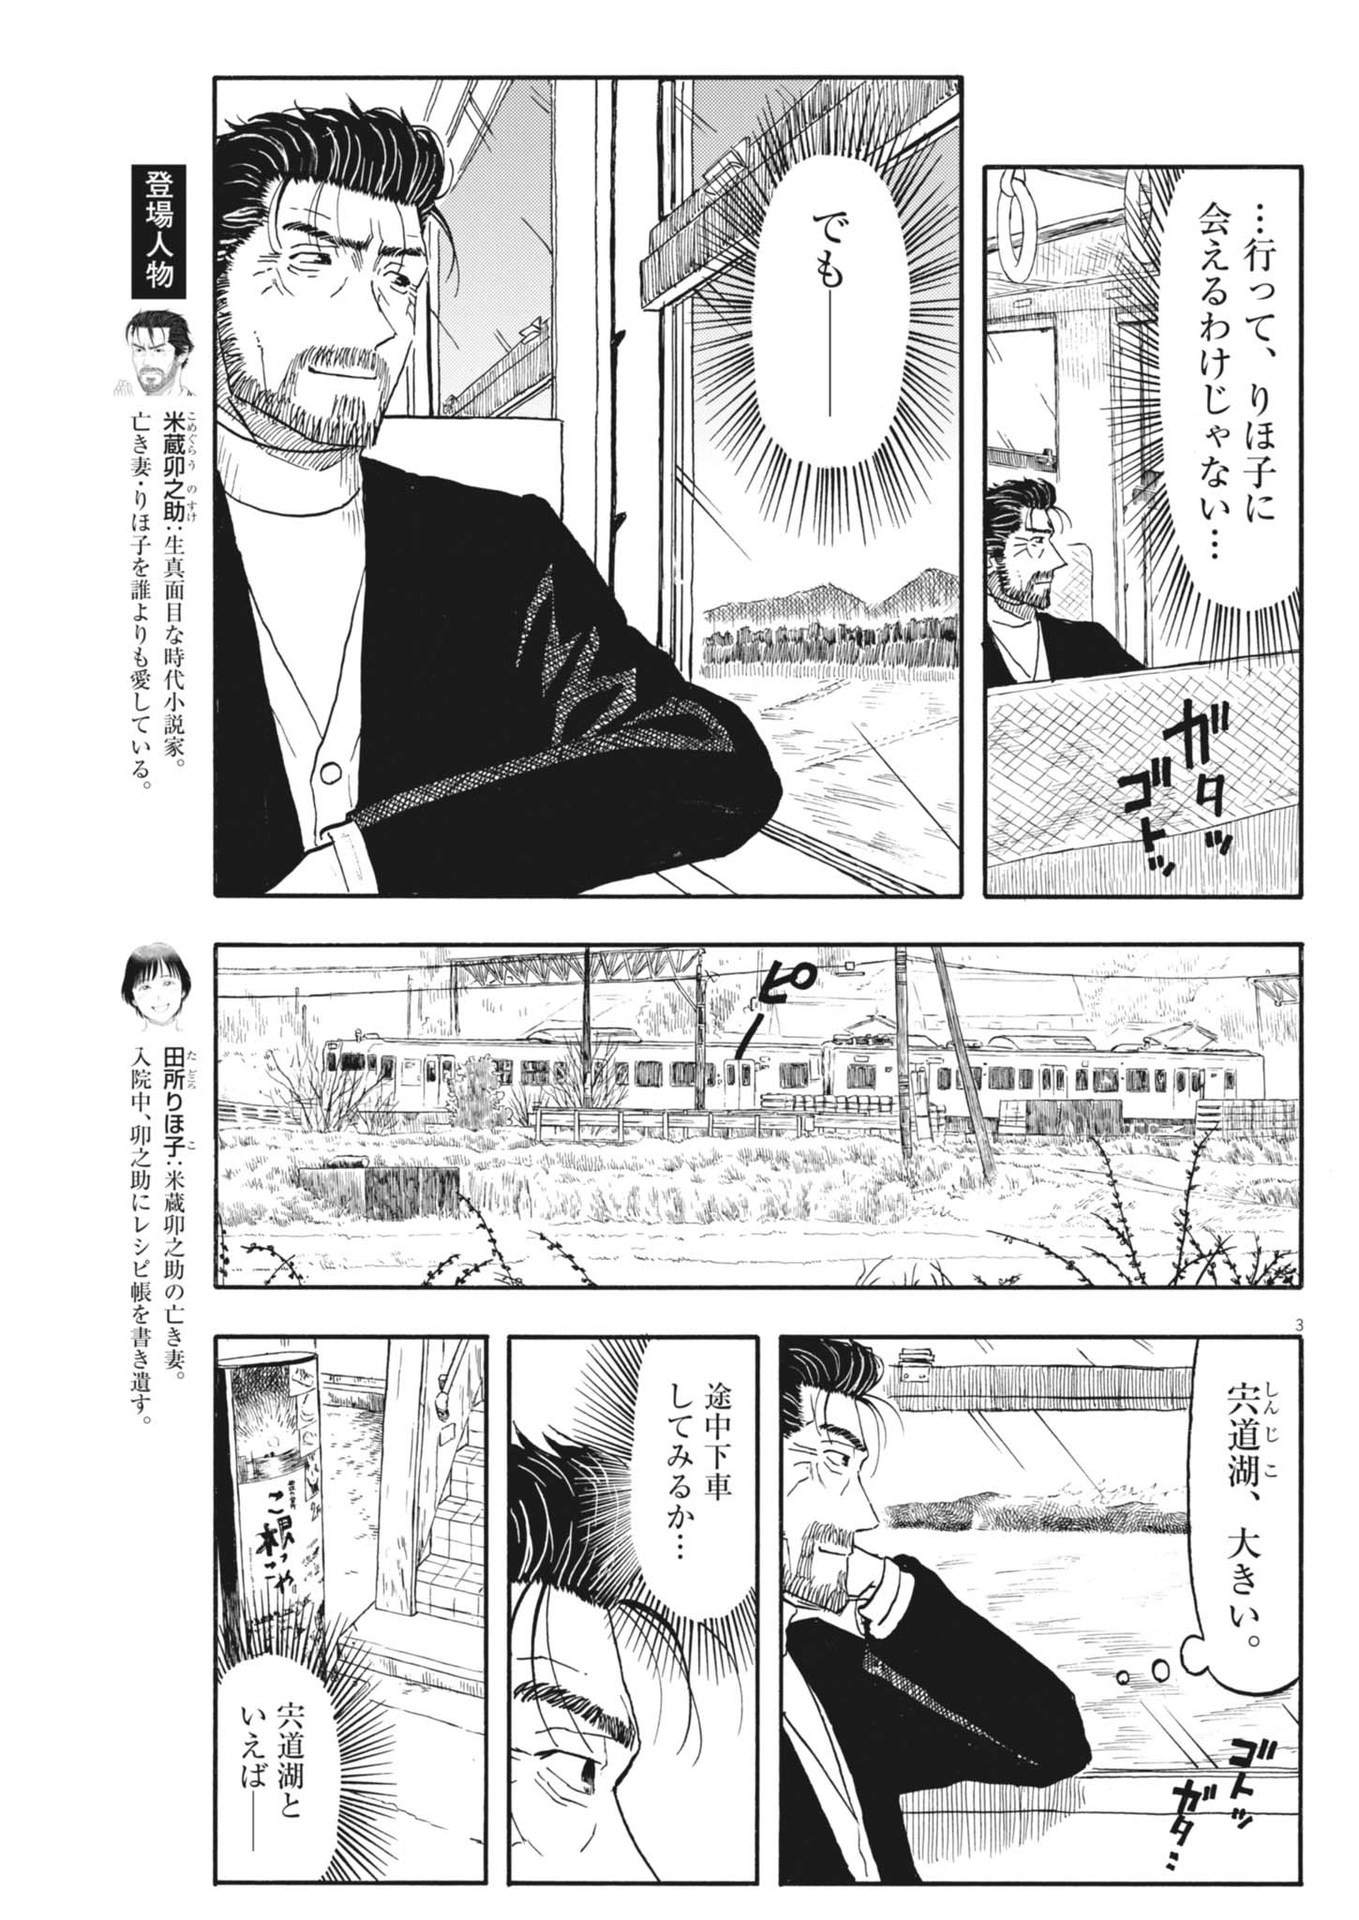 Komegura Fuufu no Recipe-chou - Chapter 36 - Page 3